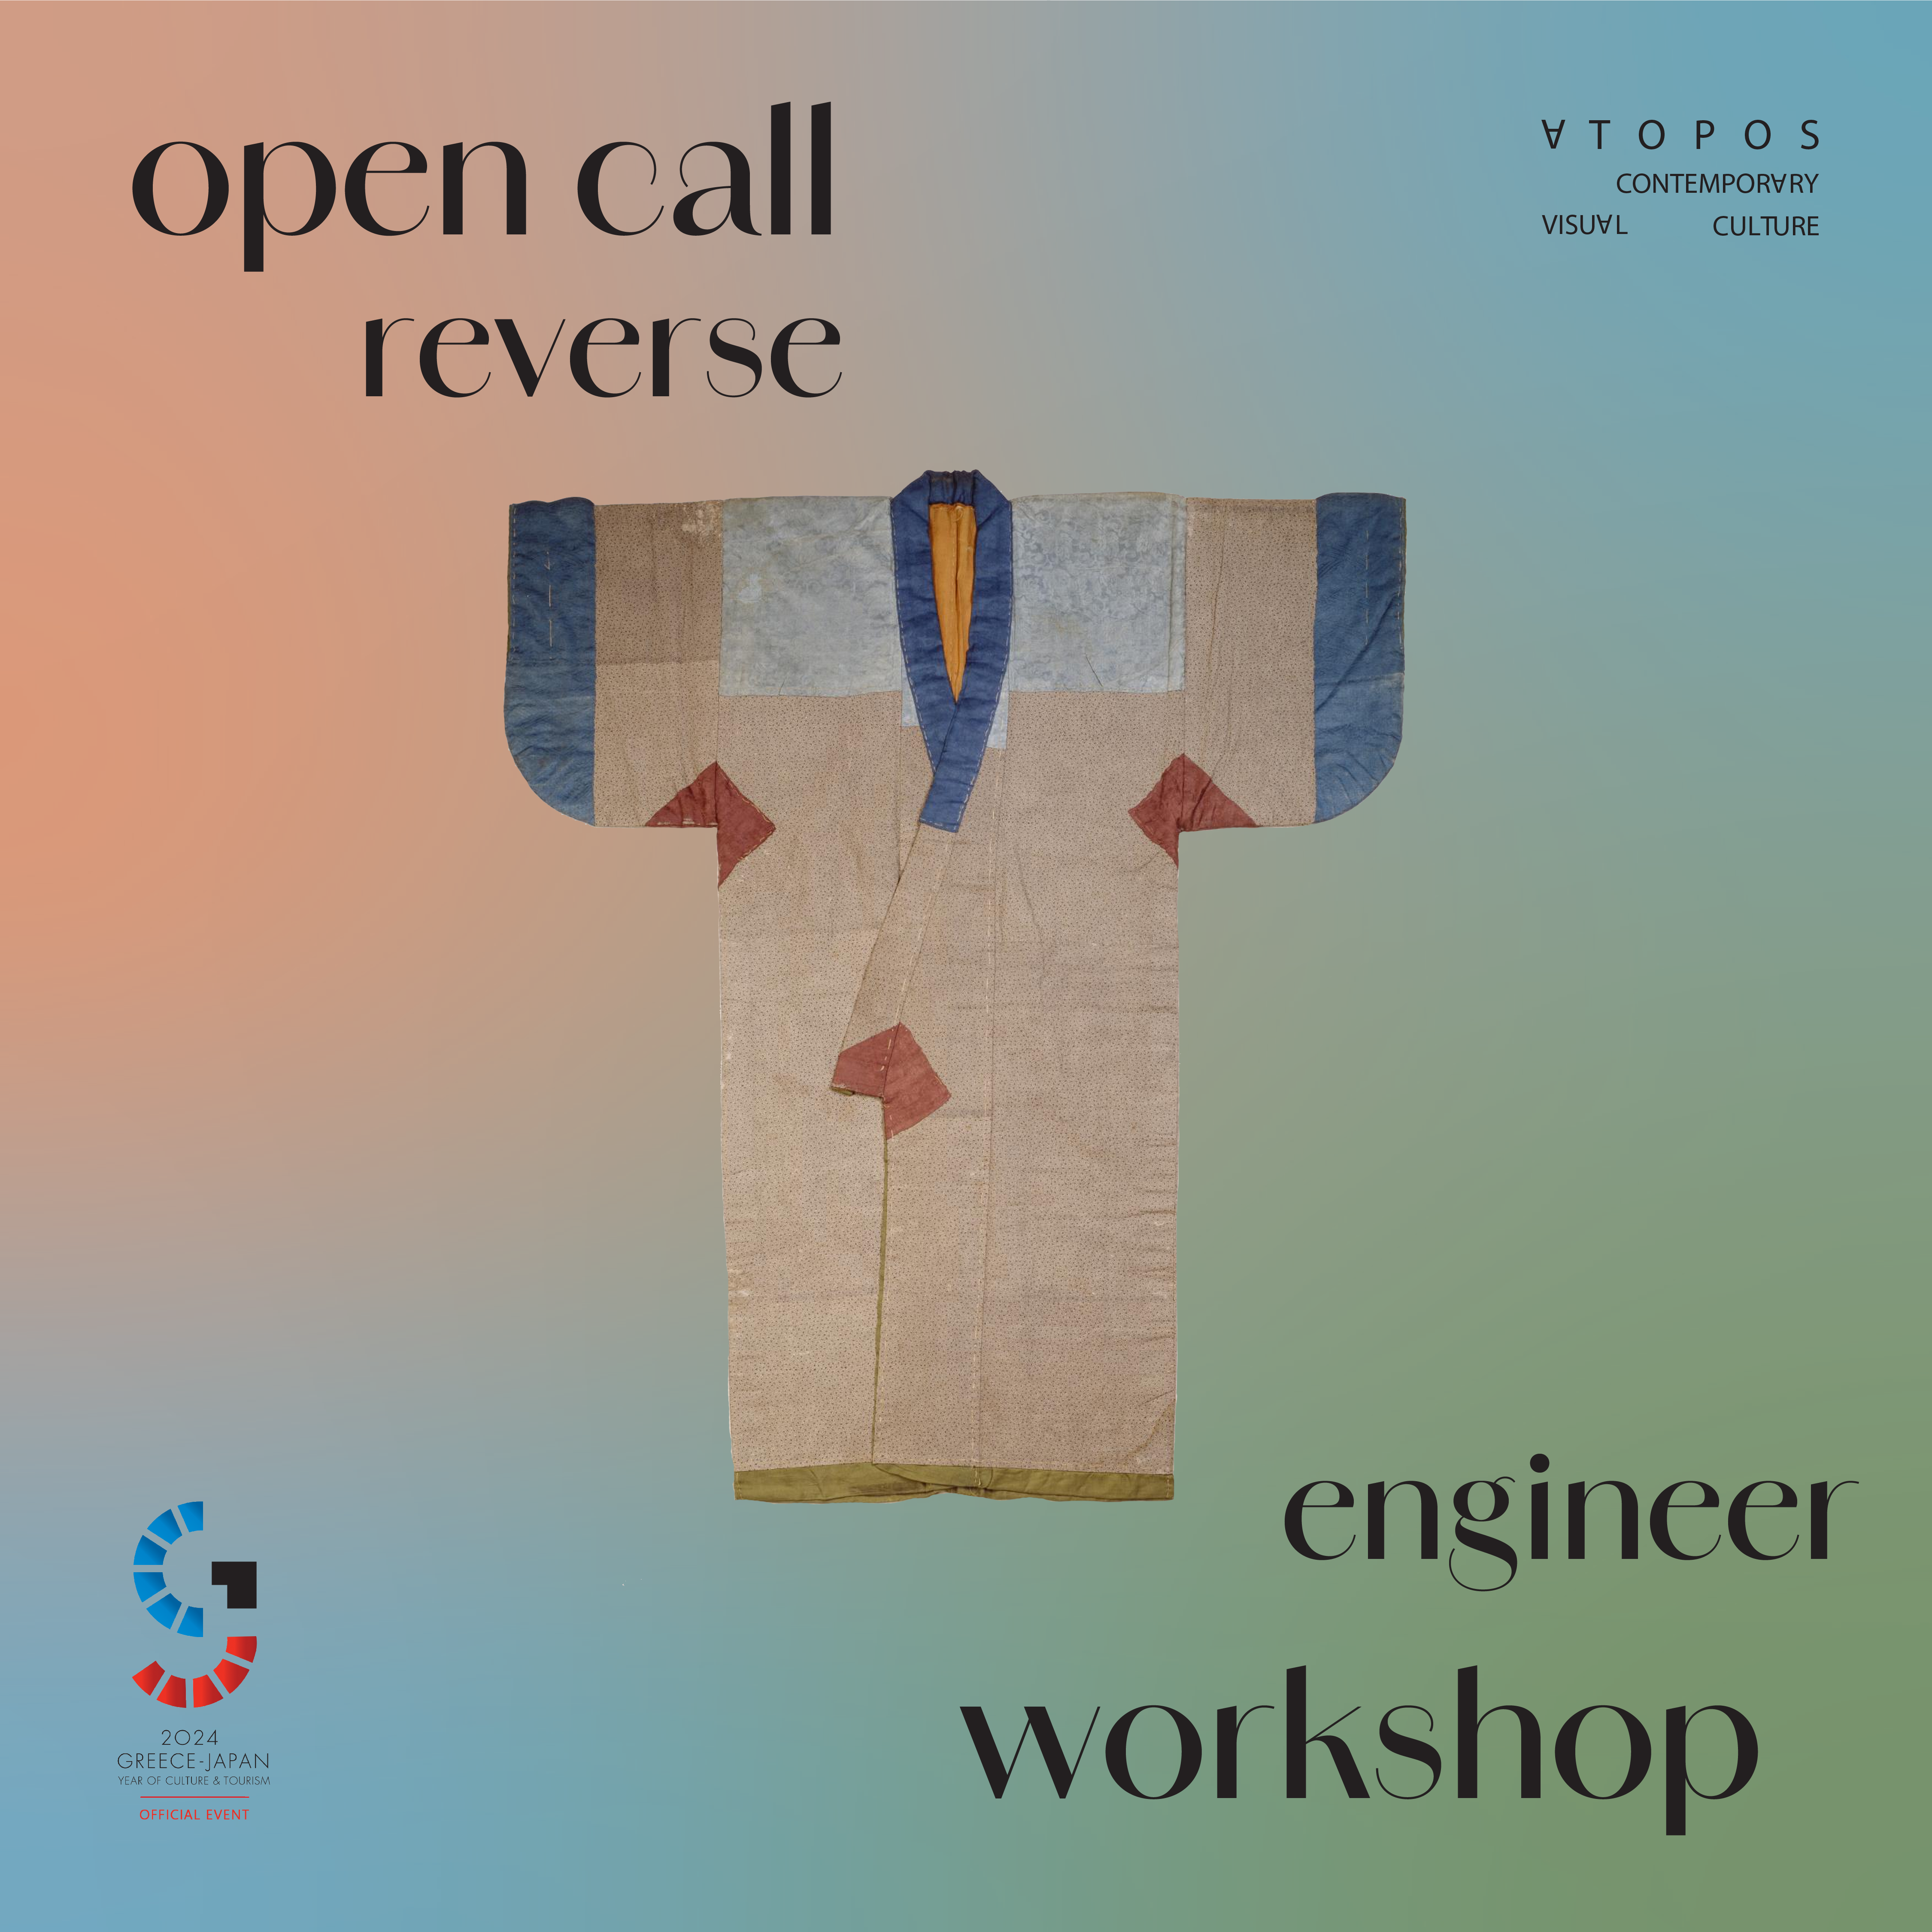 Open call reverse engineer workshop (1)